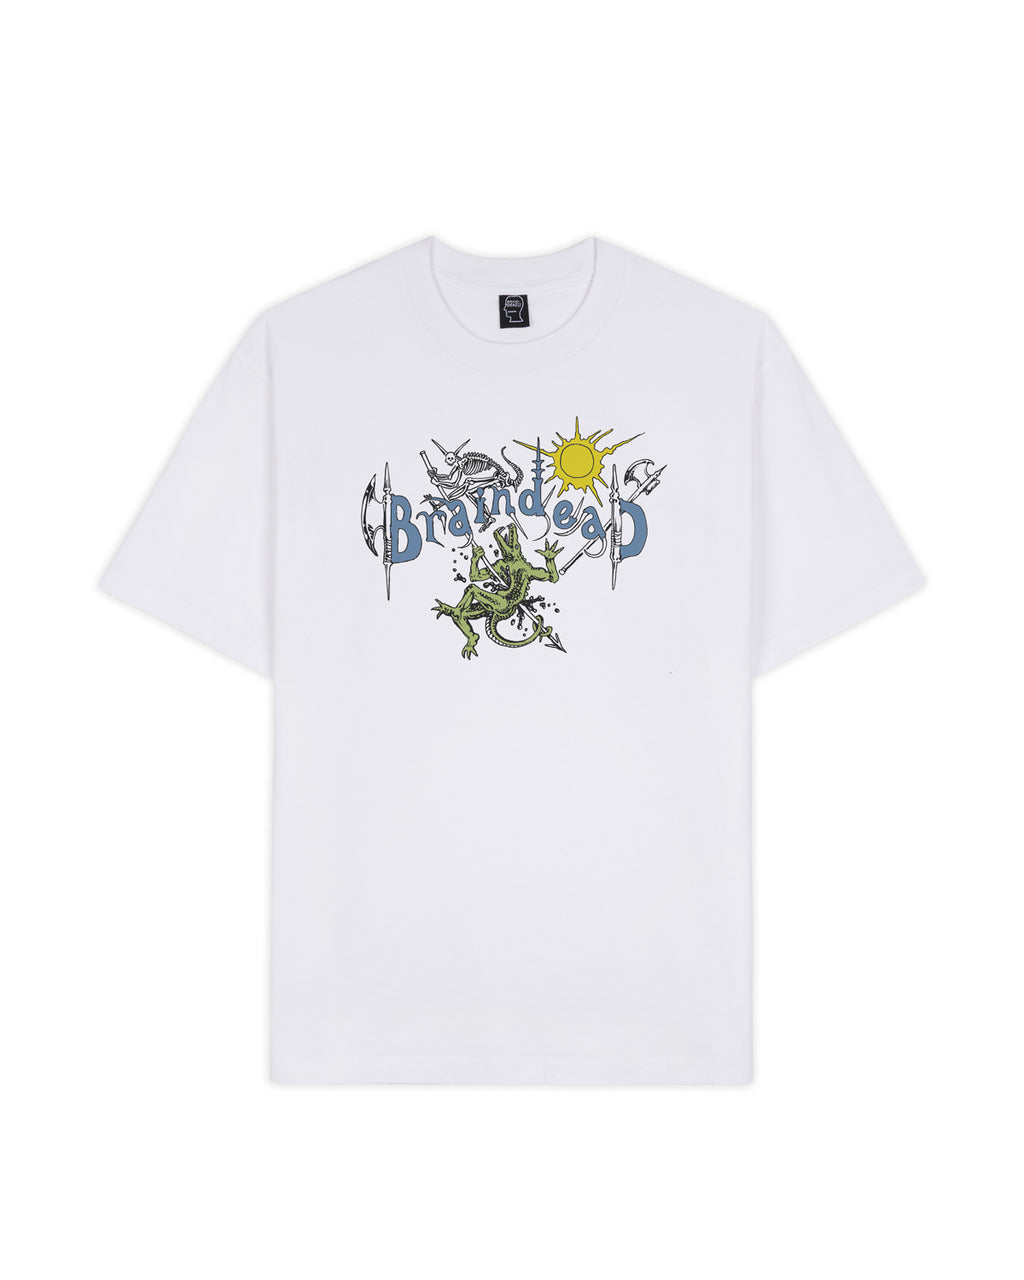 Lizard Man T-shirt - White